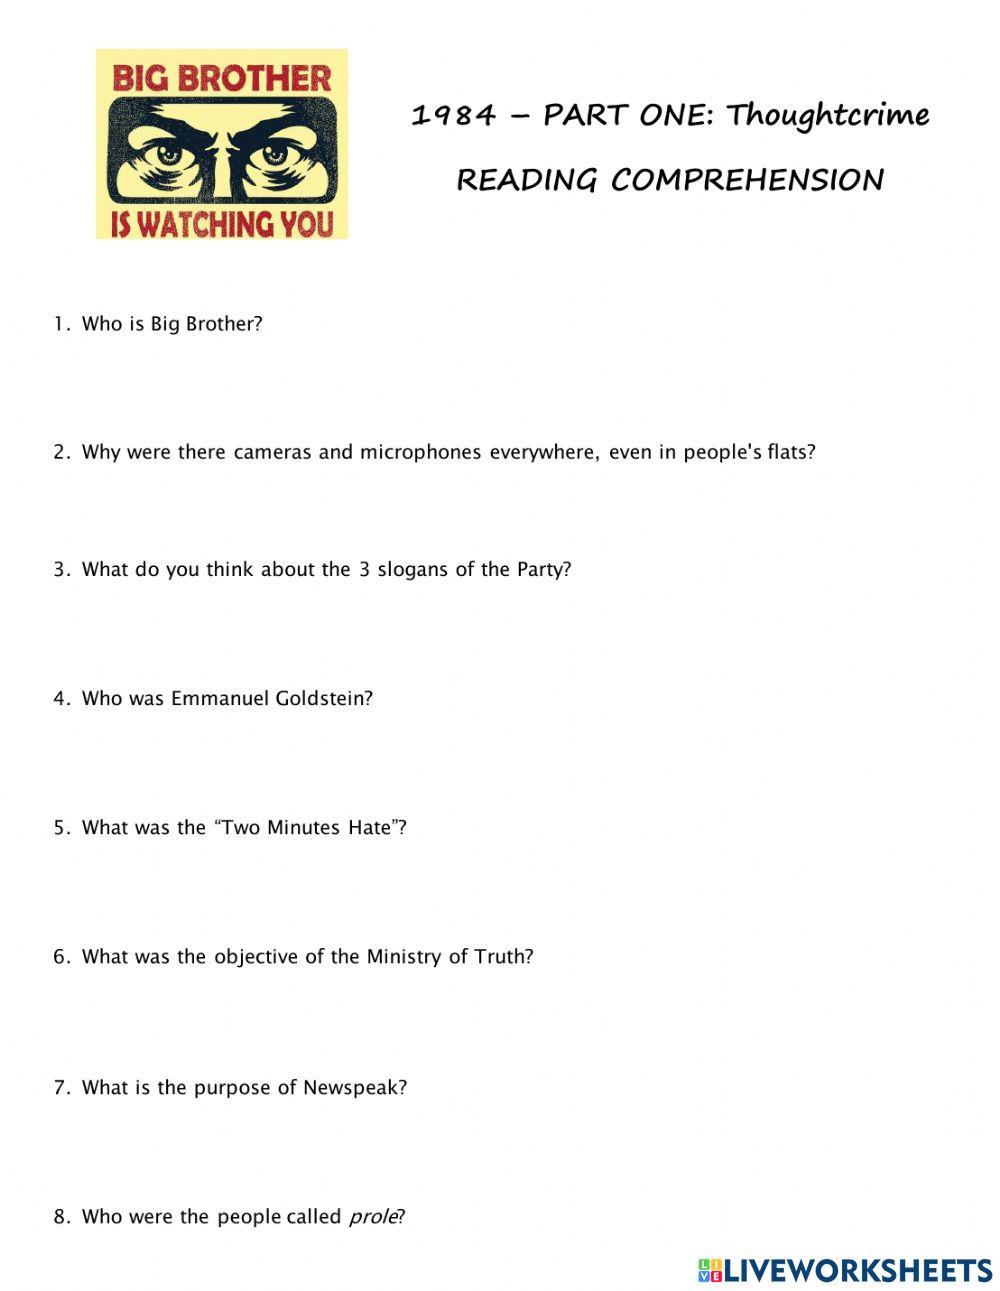 1984 - Part 1 - Reading Comprehension